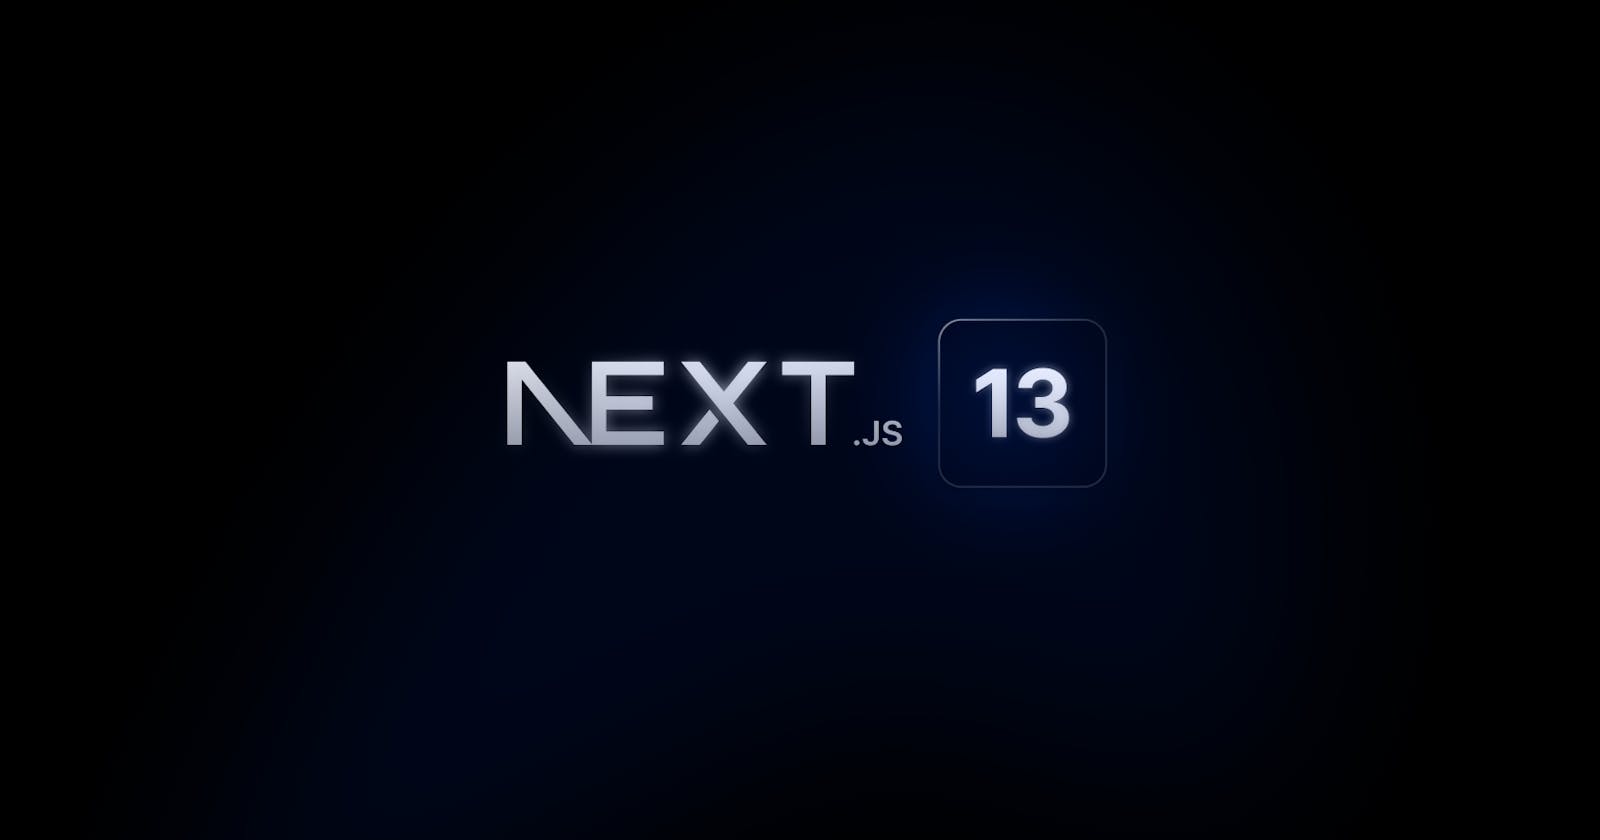 Top 5 Features of Next.js 13